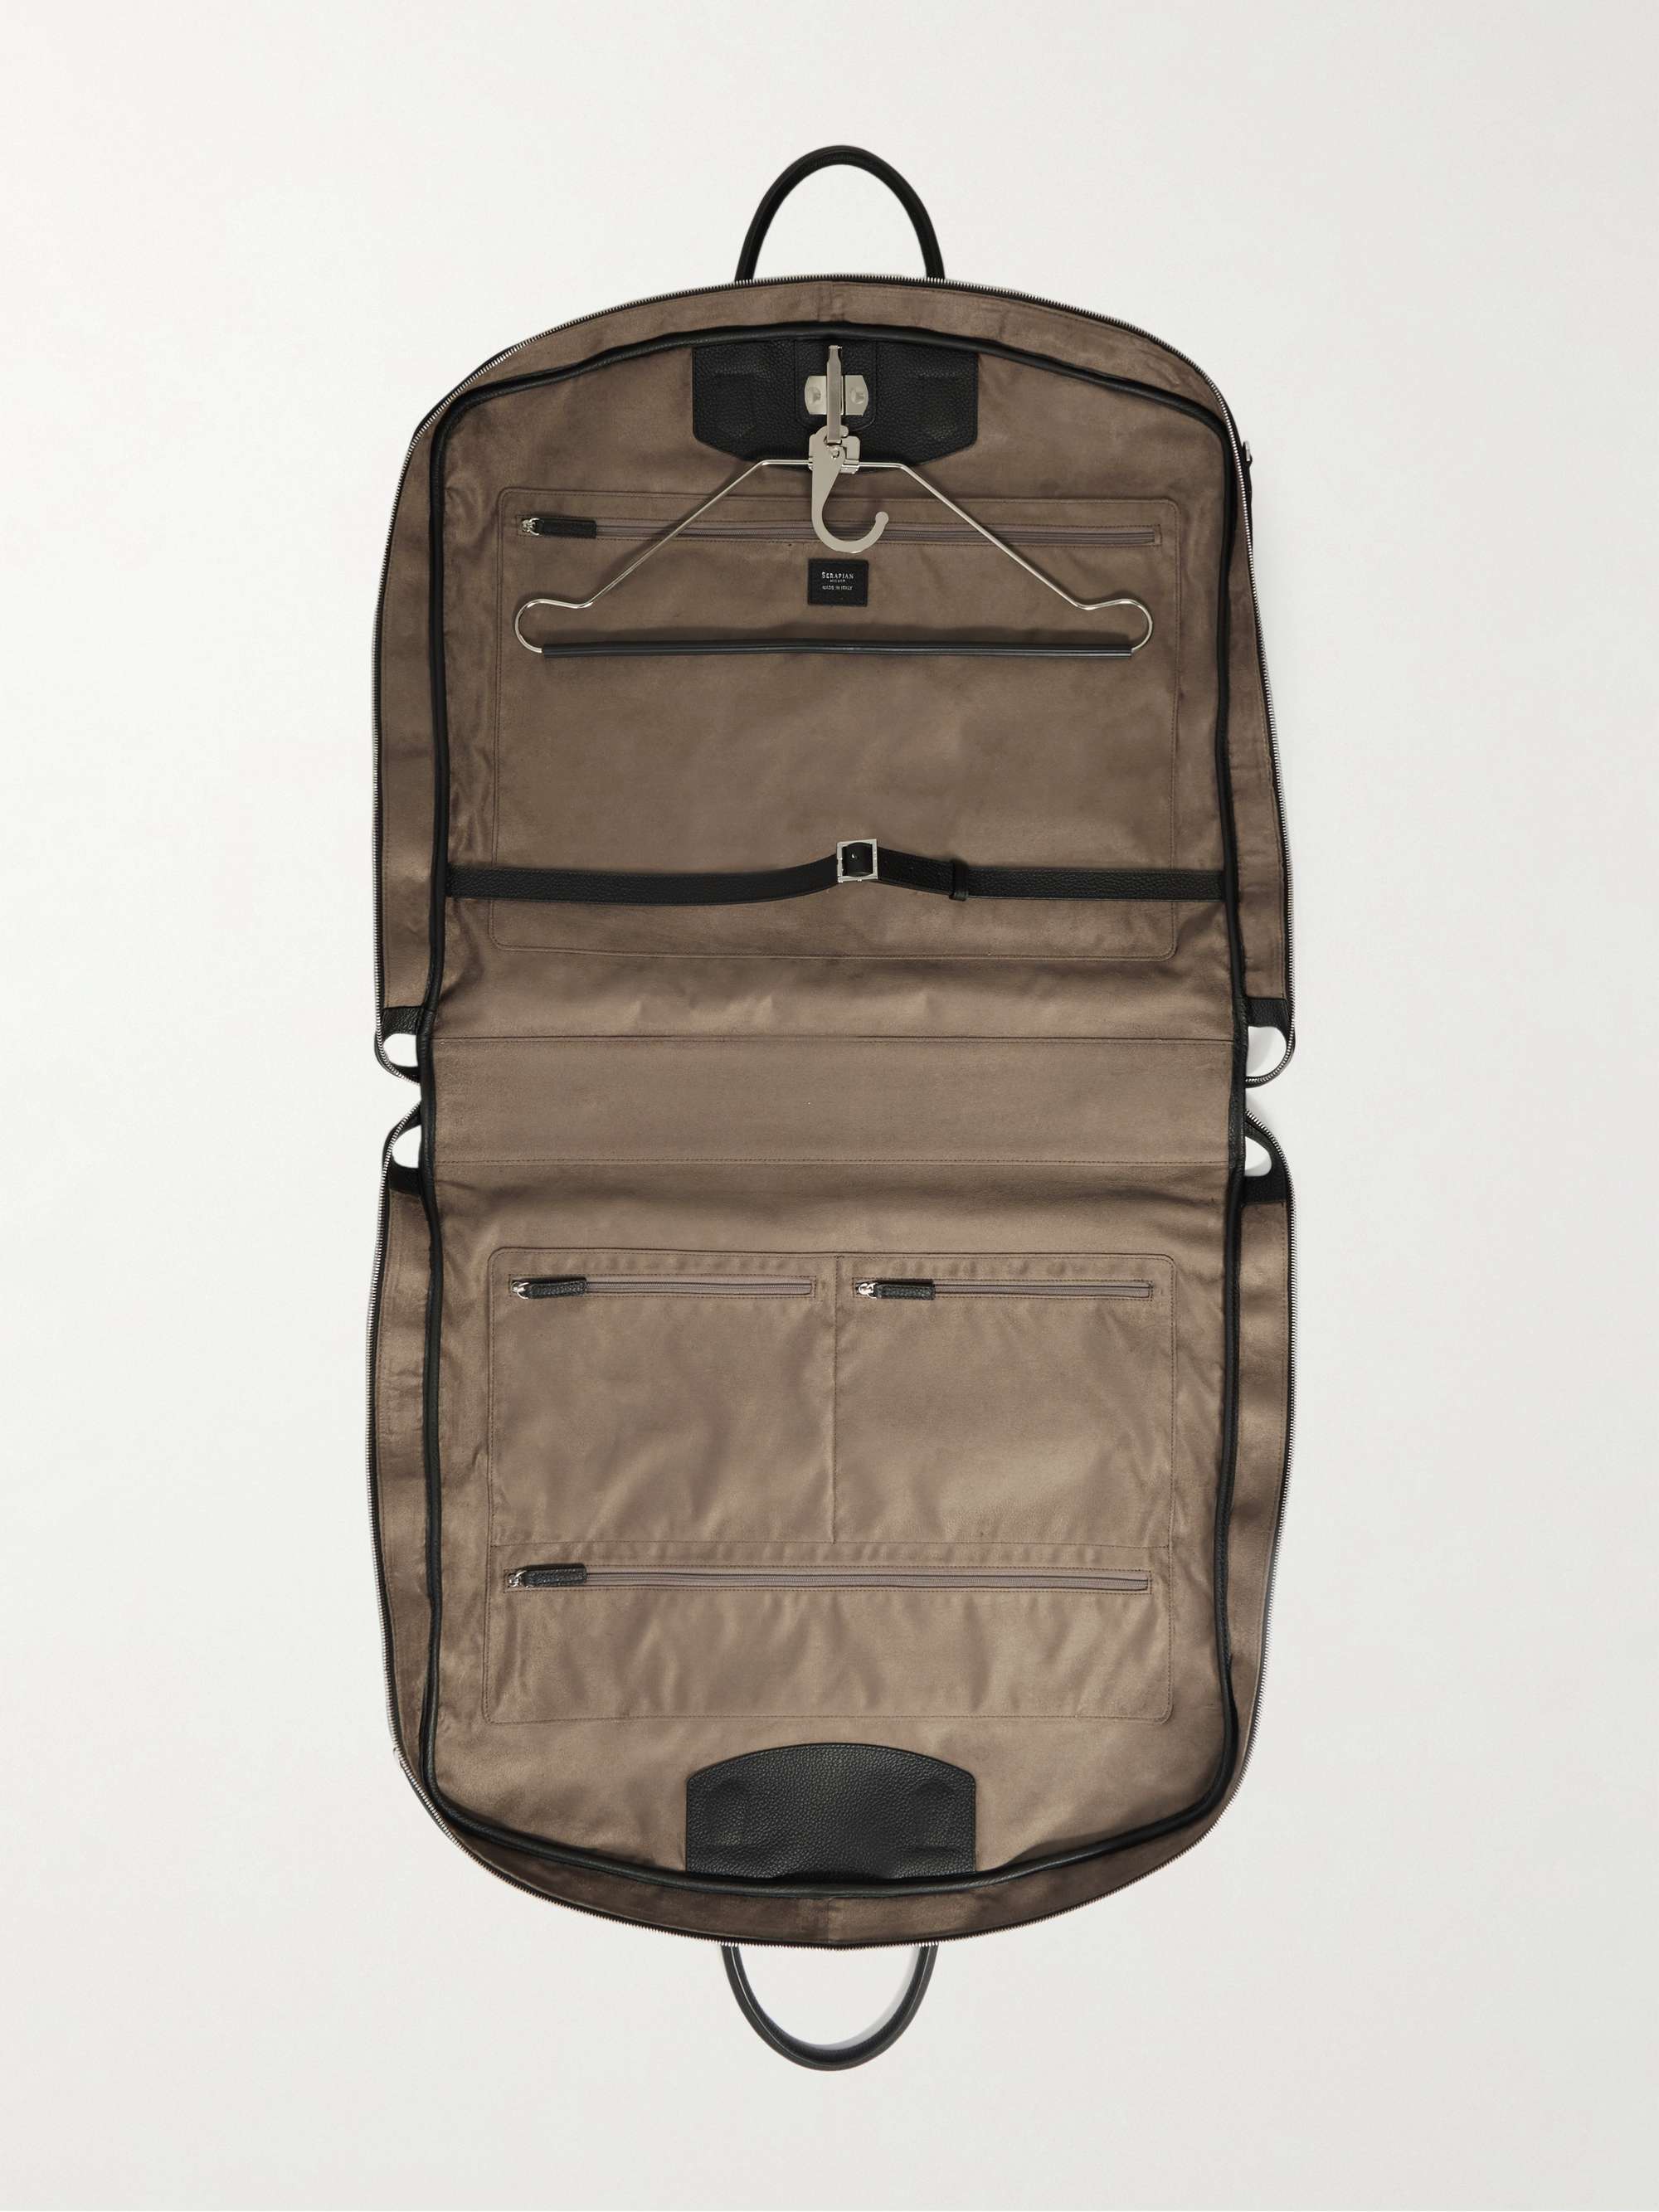 SERAPIAN Full-Grain Leather Suit Carrier